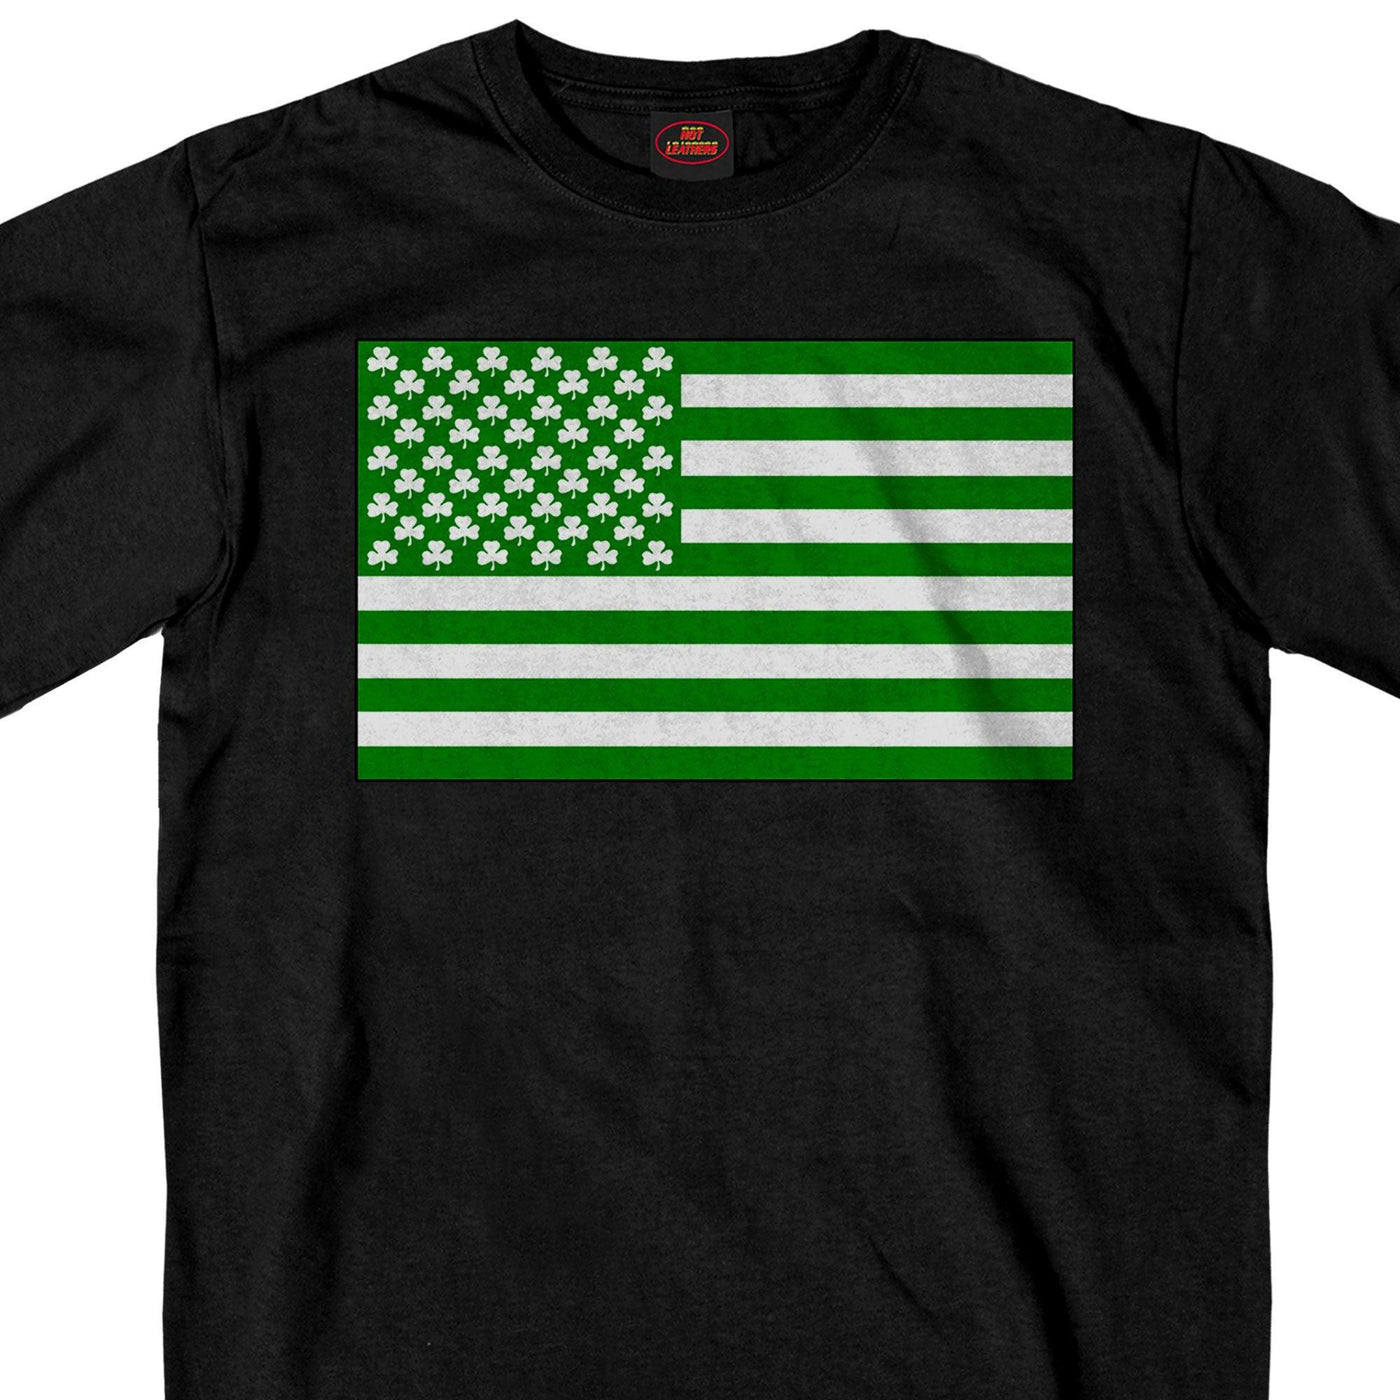 Hot Leathers Men's Shamrock Flag T-Shirt, Black - American Legend Rider